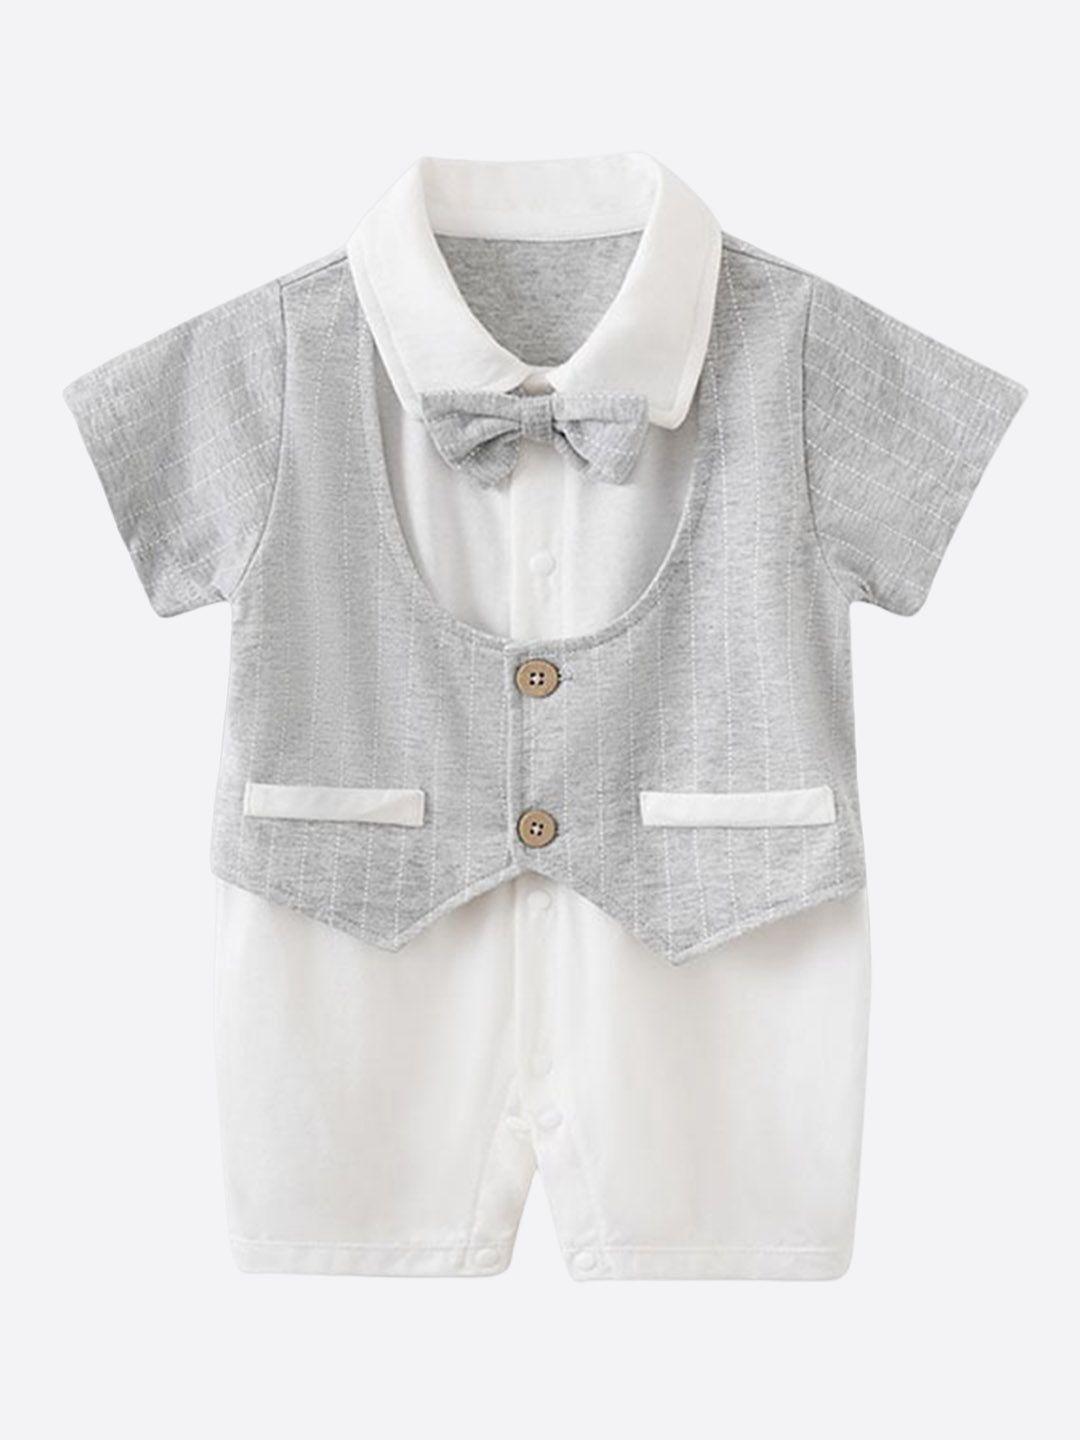 stylecast grey infant boys striped shirt collar short sleeves cotton romper